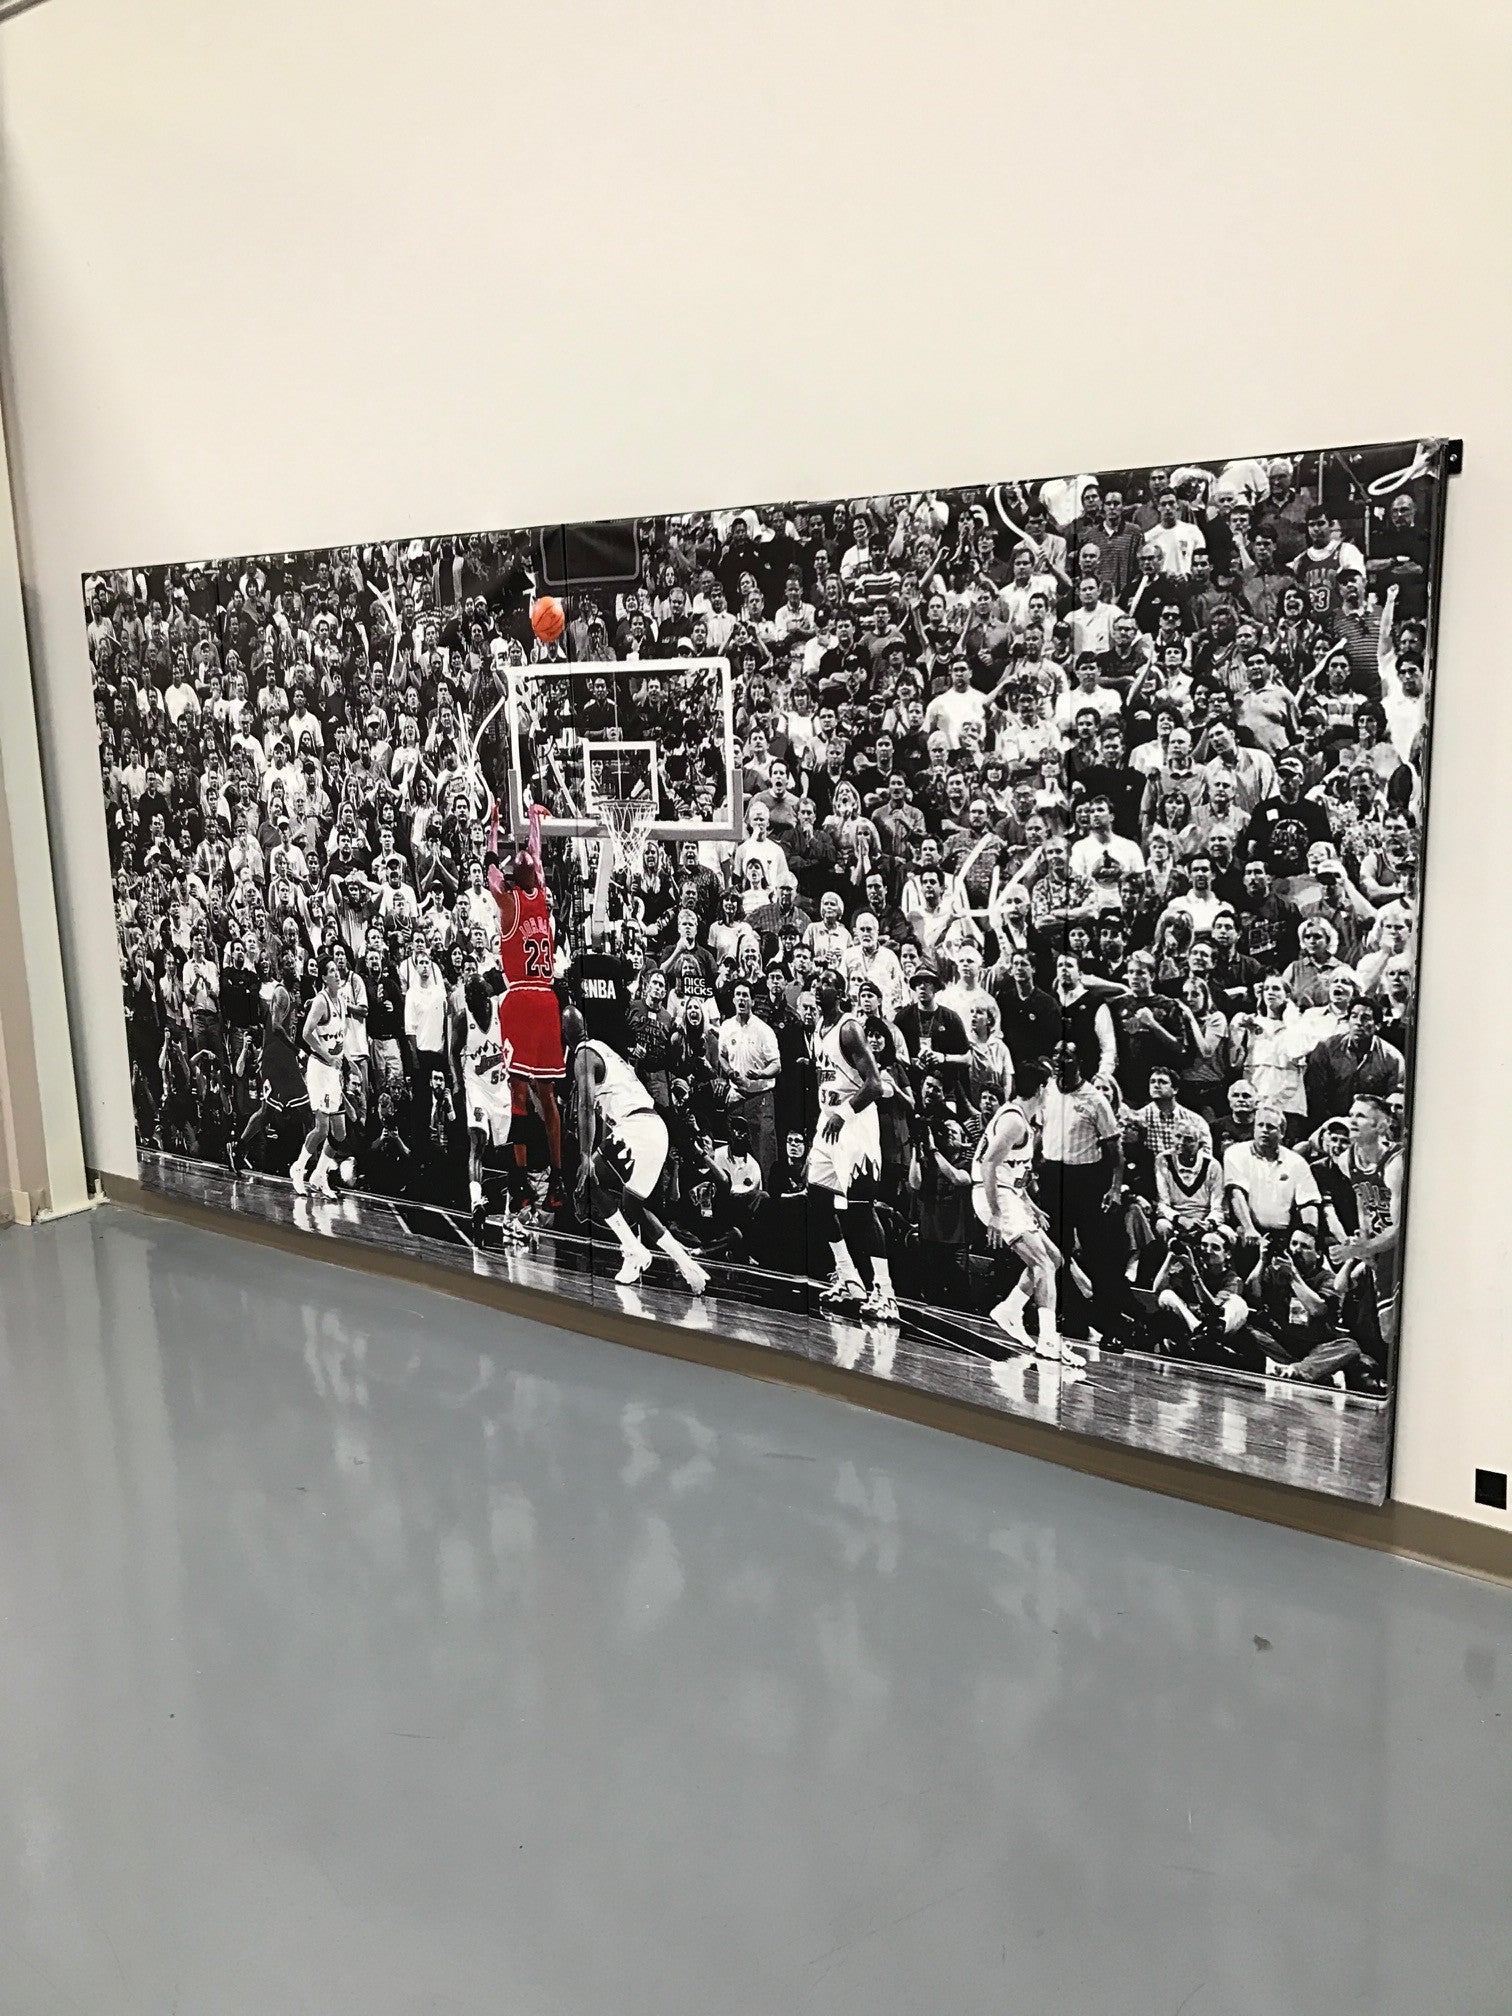 Digitally Printed 6' x 12' x 2" Removable Folding Gym Wall Pad